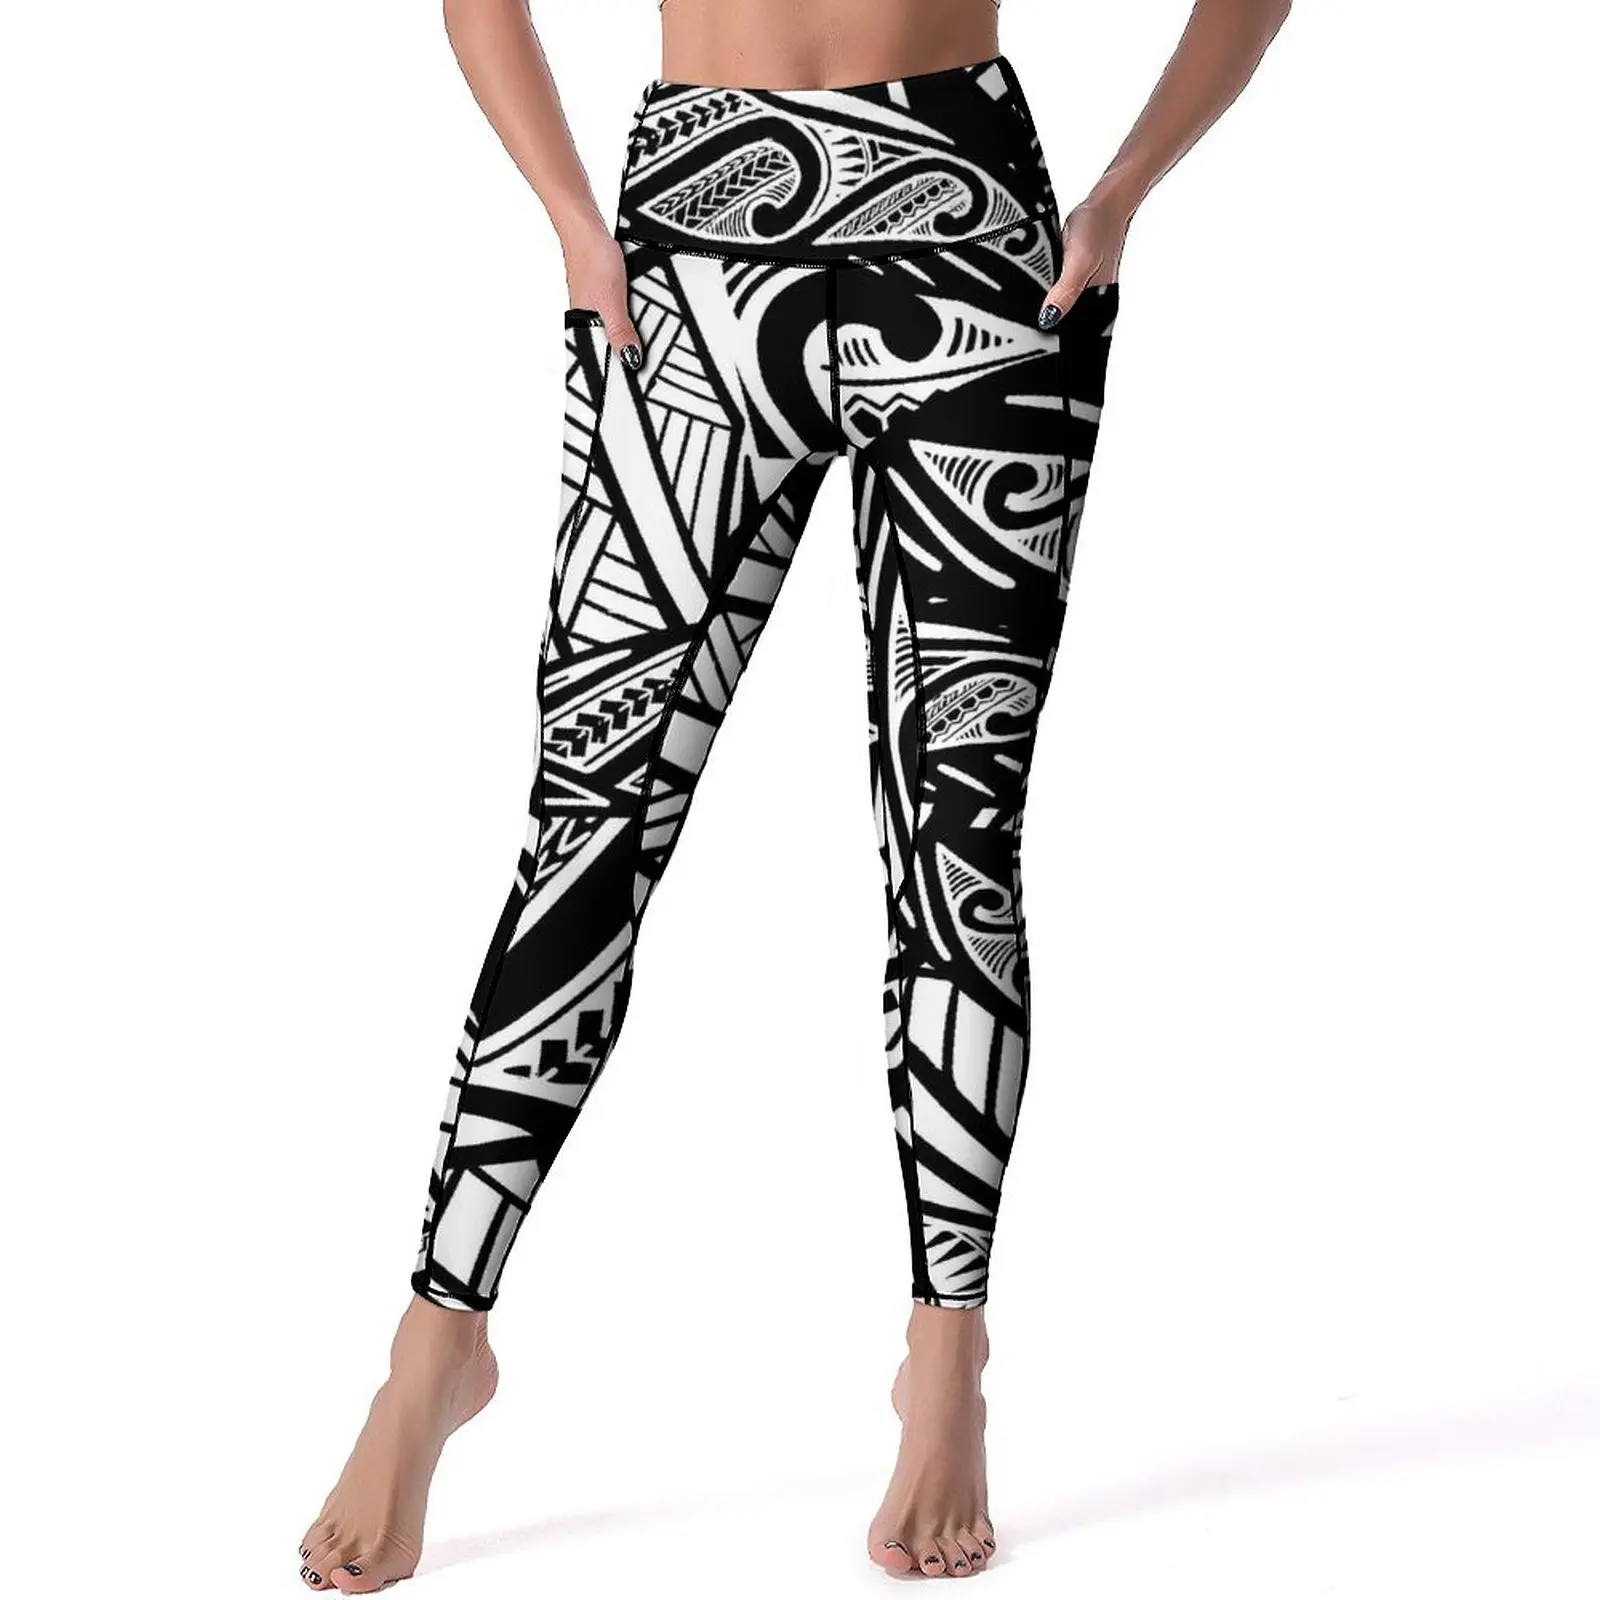 

Retro Tribal Print Leggings Sexy Black And White High Waist Yoga Pants Funny Stretch Leggins Lady Pattern Fitness Sport Legging